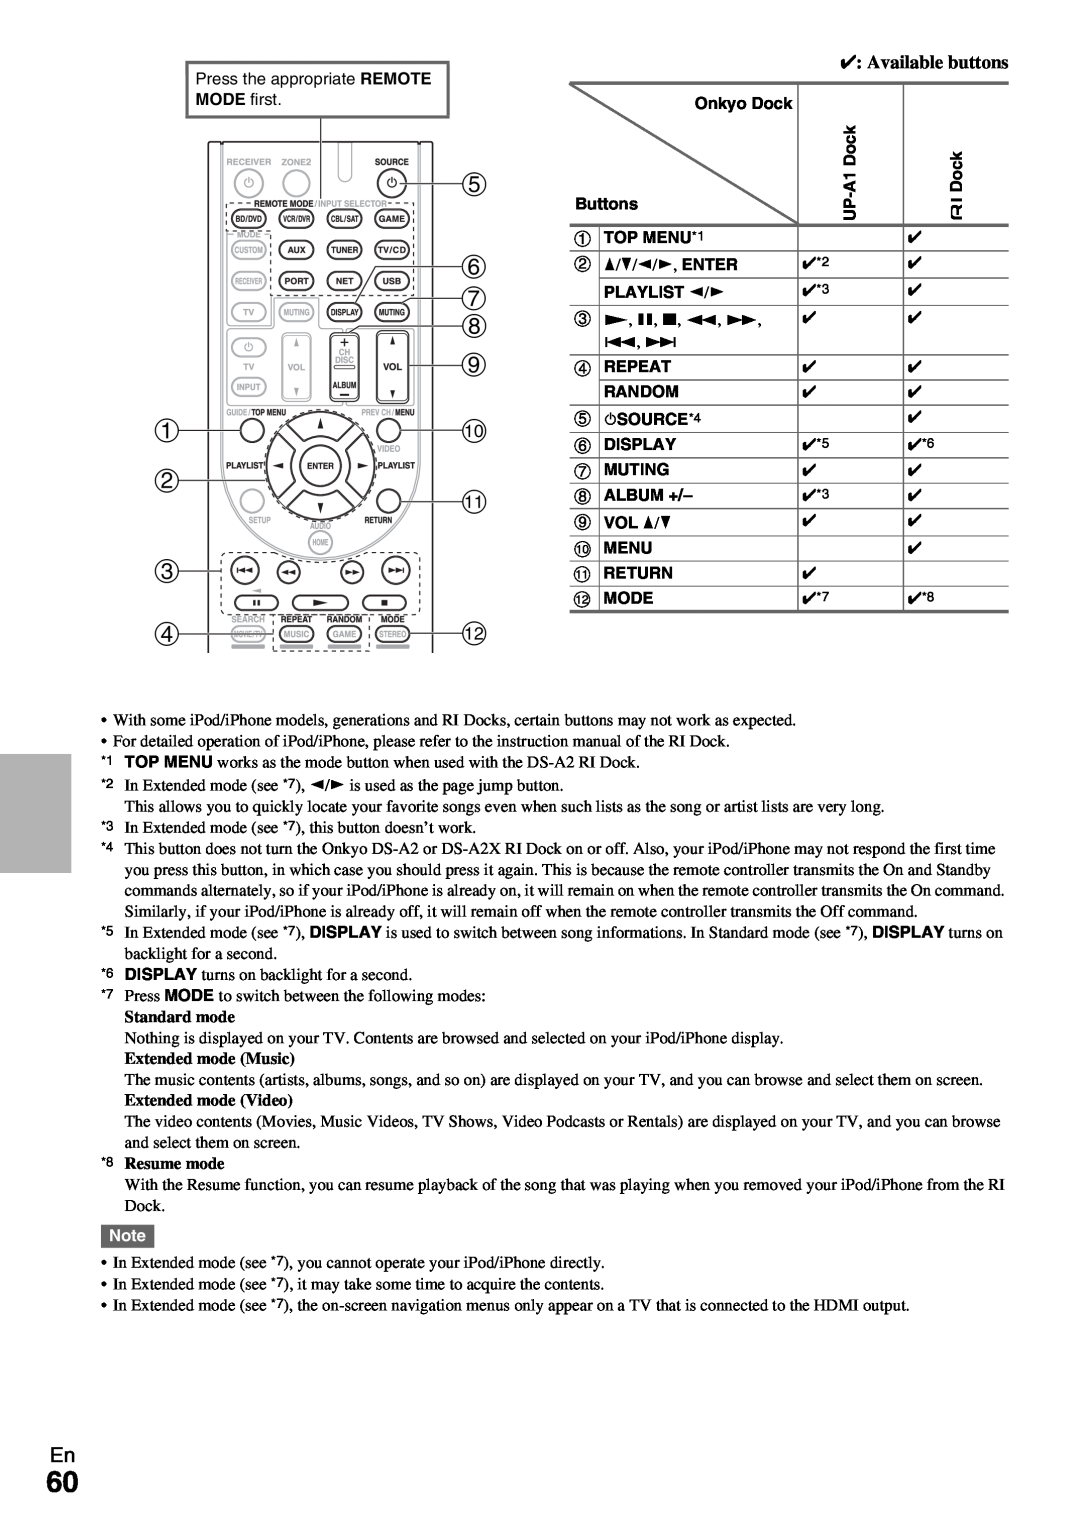 Onkyo HT-R690 instruction manual 